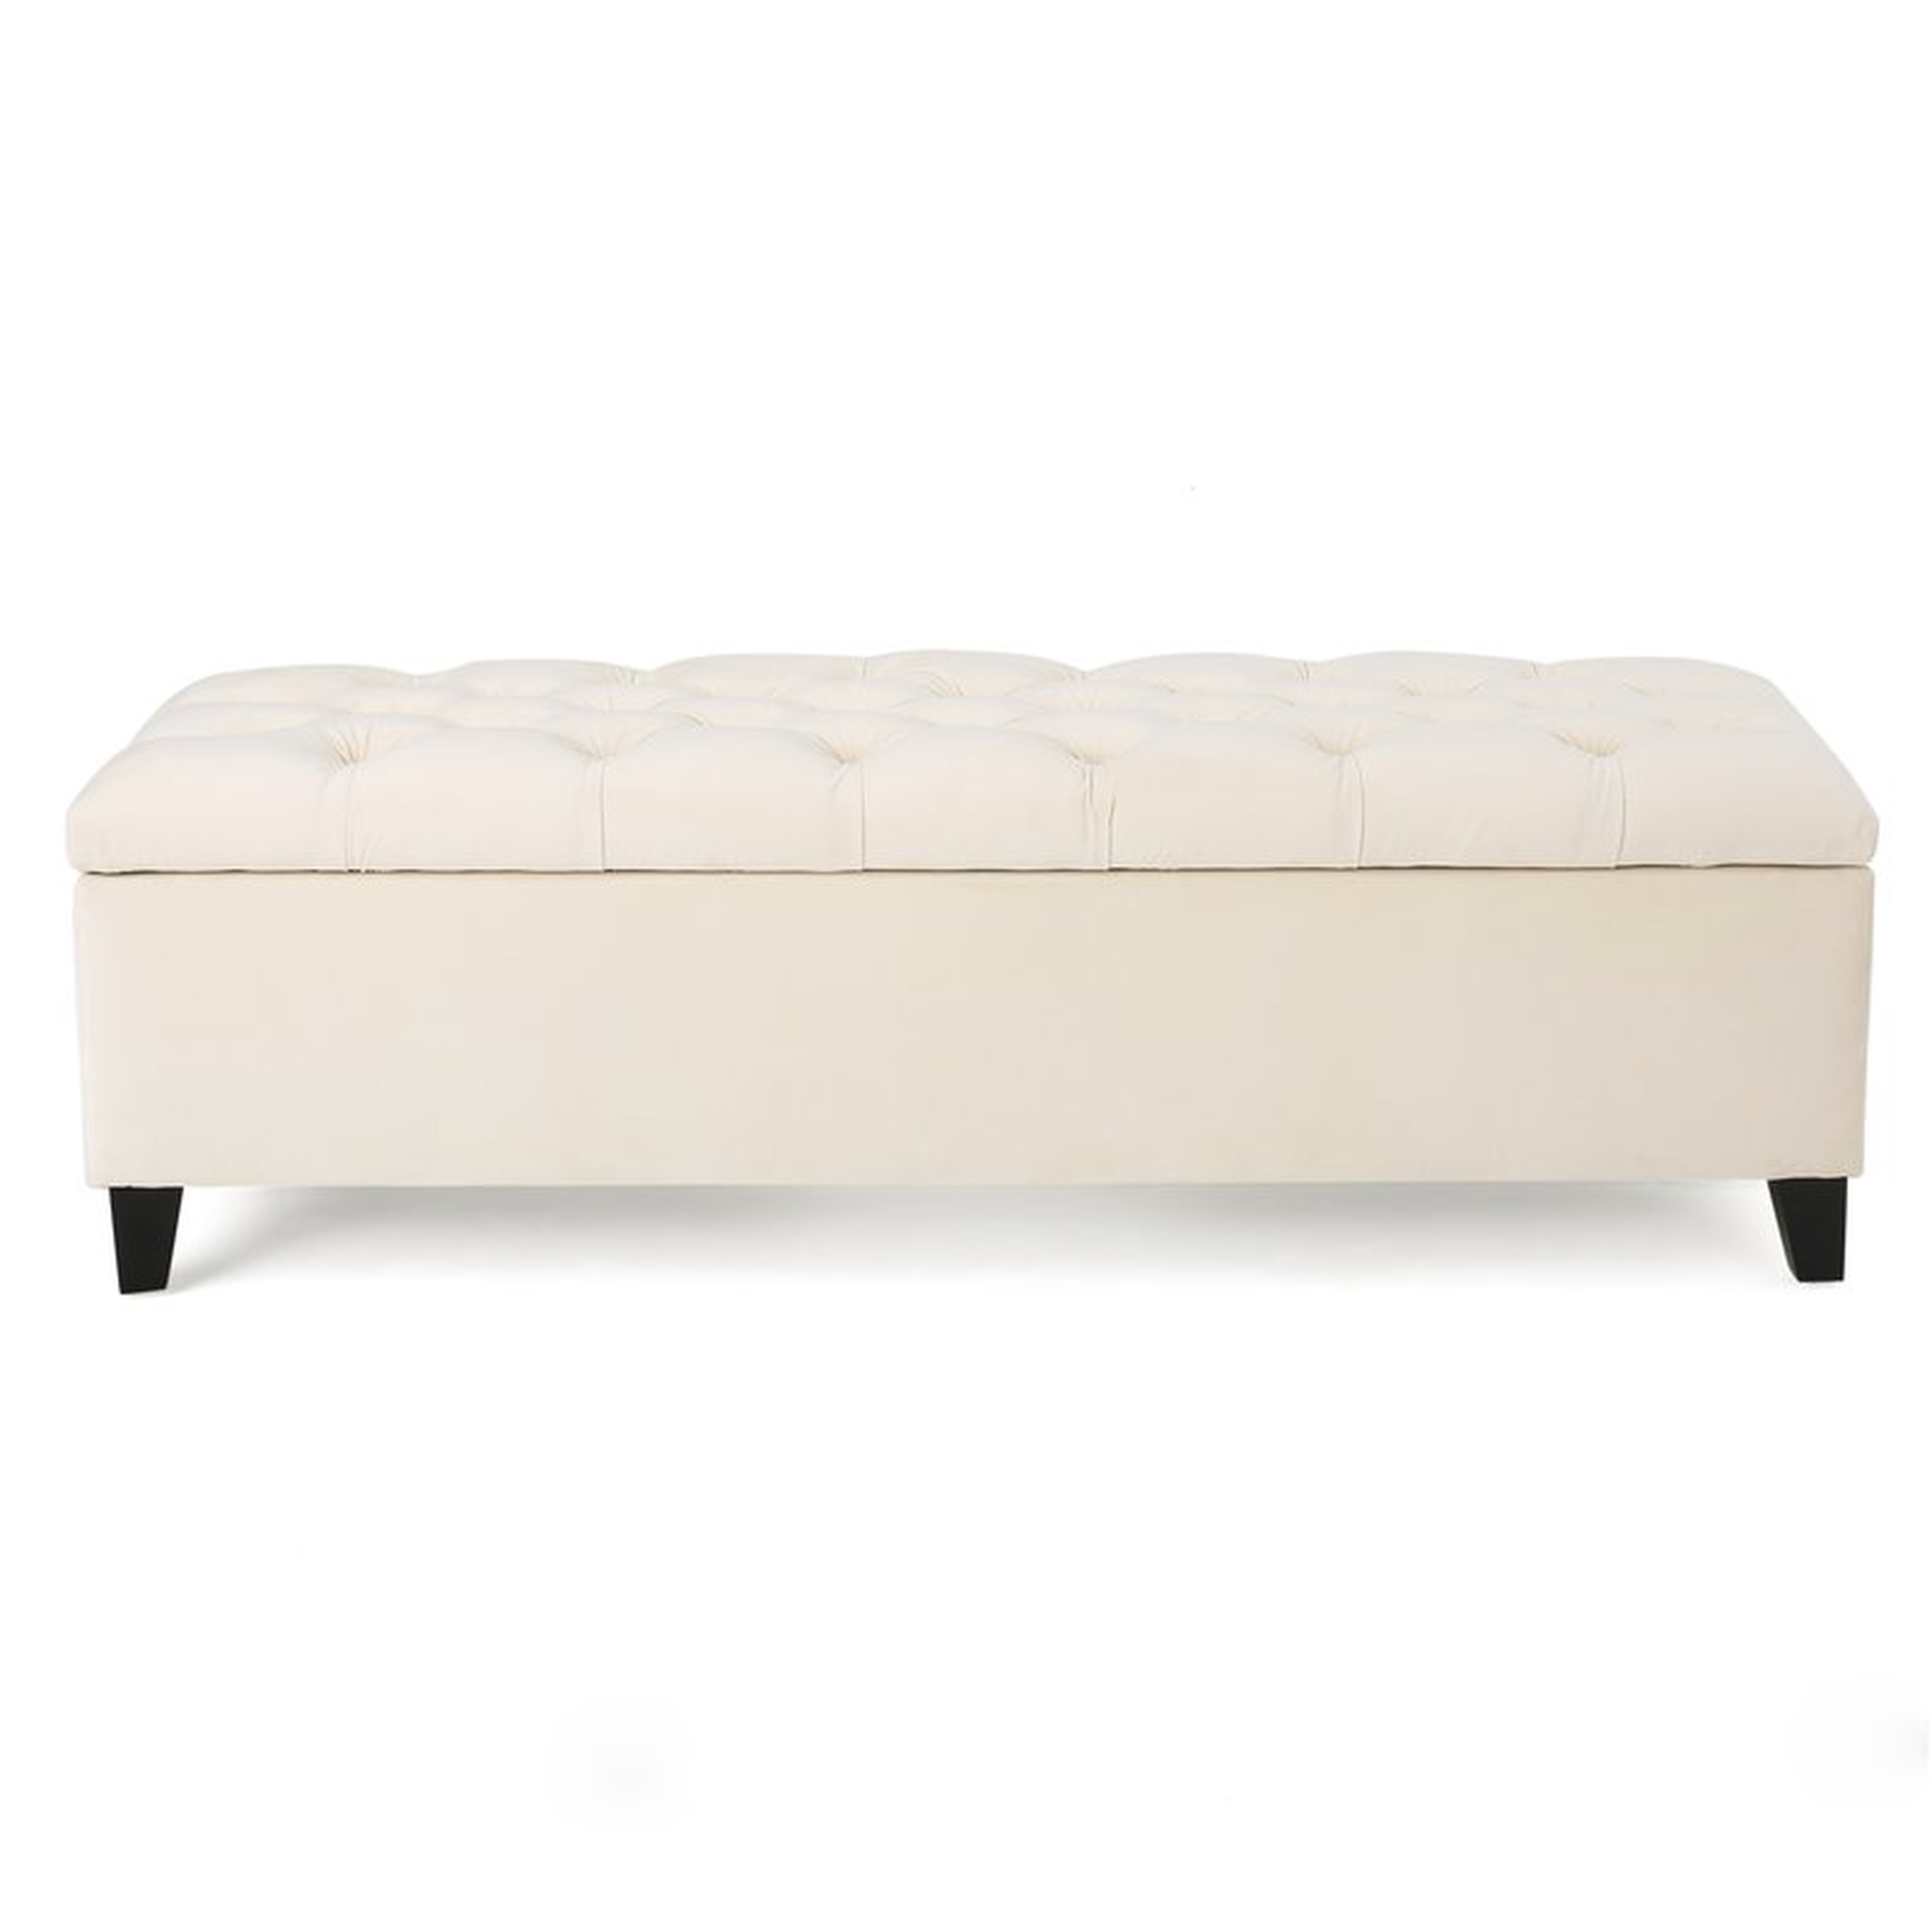 Amalfi Upholstered Storage Bench - Wayfair